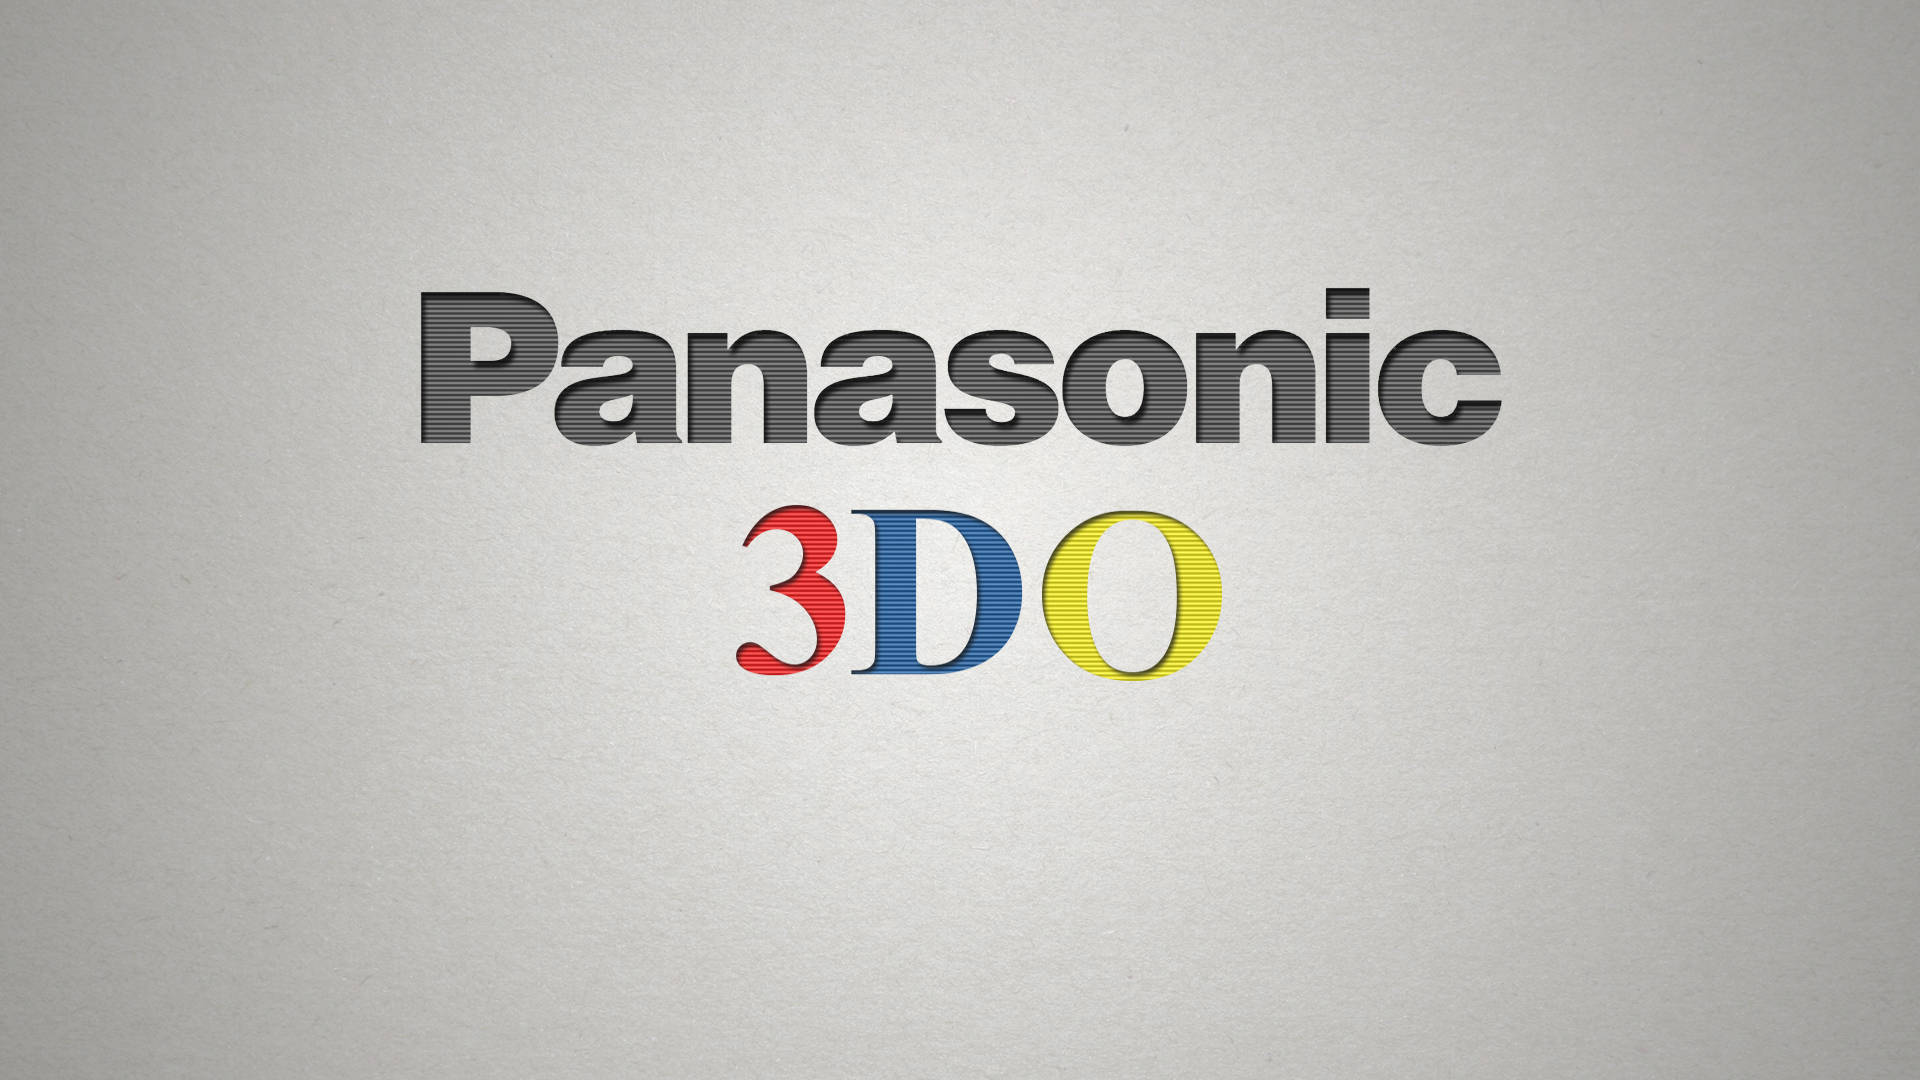 Panasonicgris 3do. Fondo de pantalla